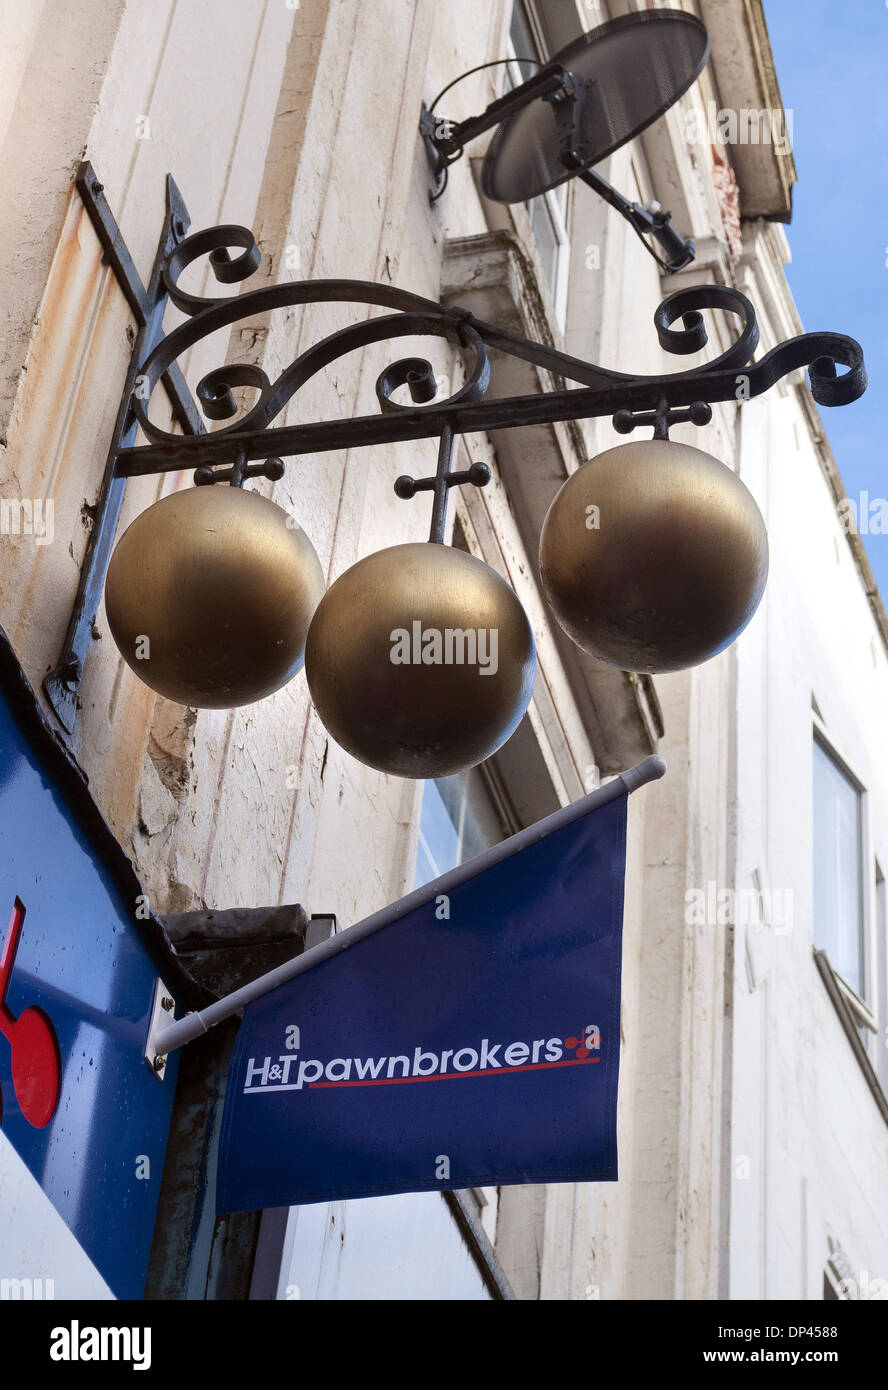 Pawnbroker sign symbol on shop front in Dudley, West Midlands, UK Stock Photo